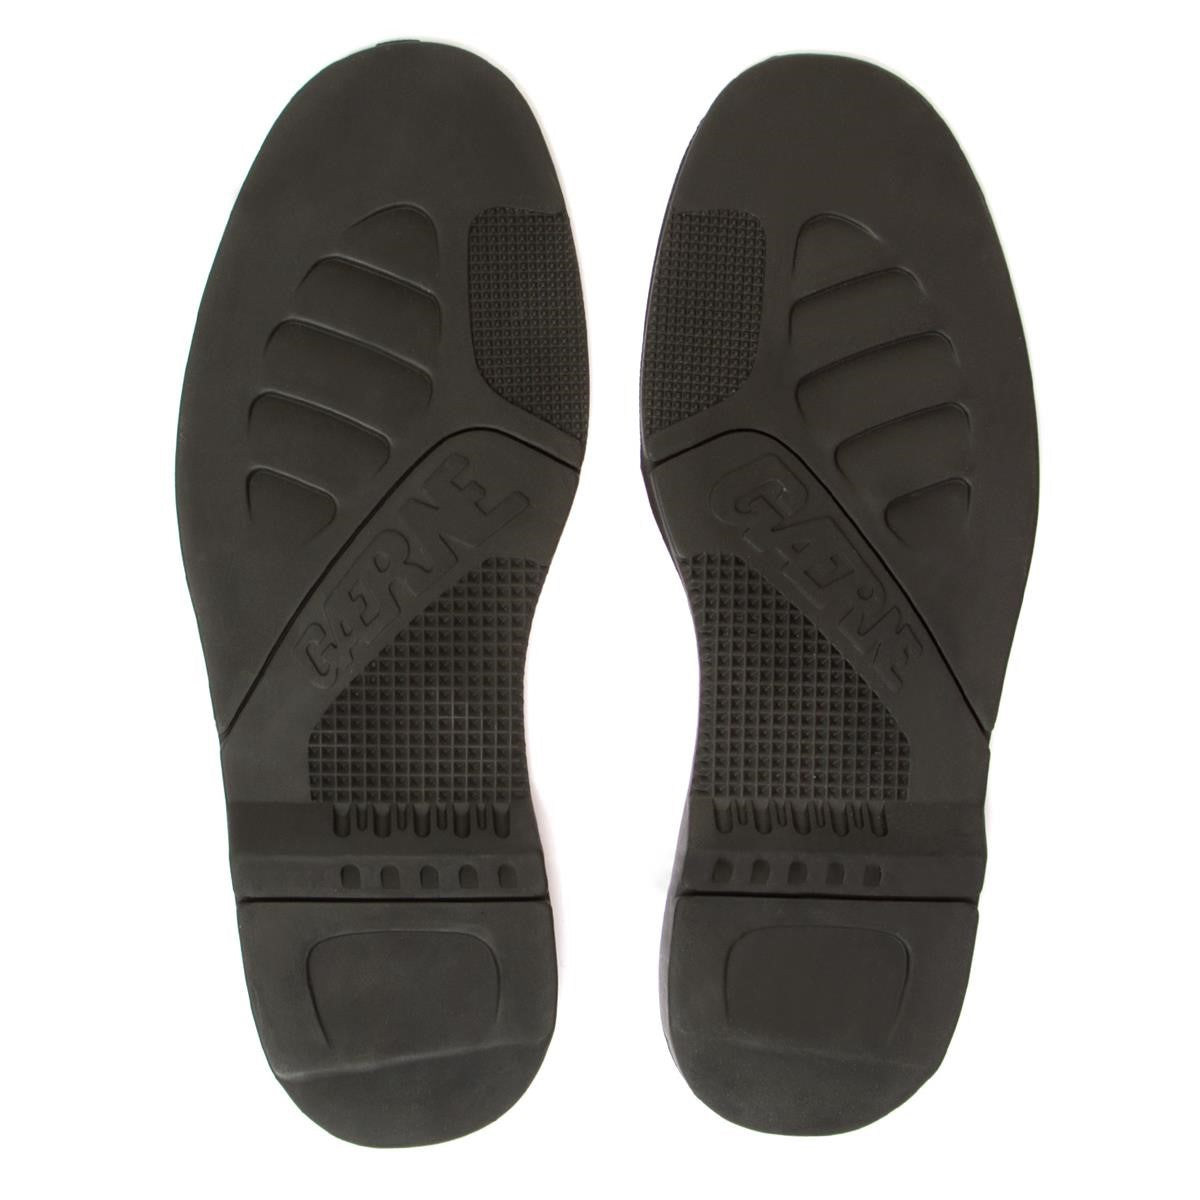 Gaerne M/X  Supercross Boots Sole 46-48 Pair - Black